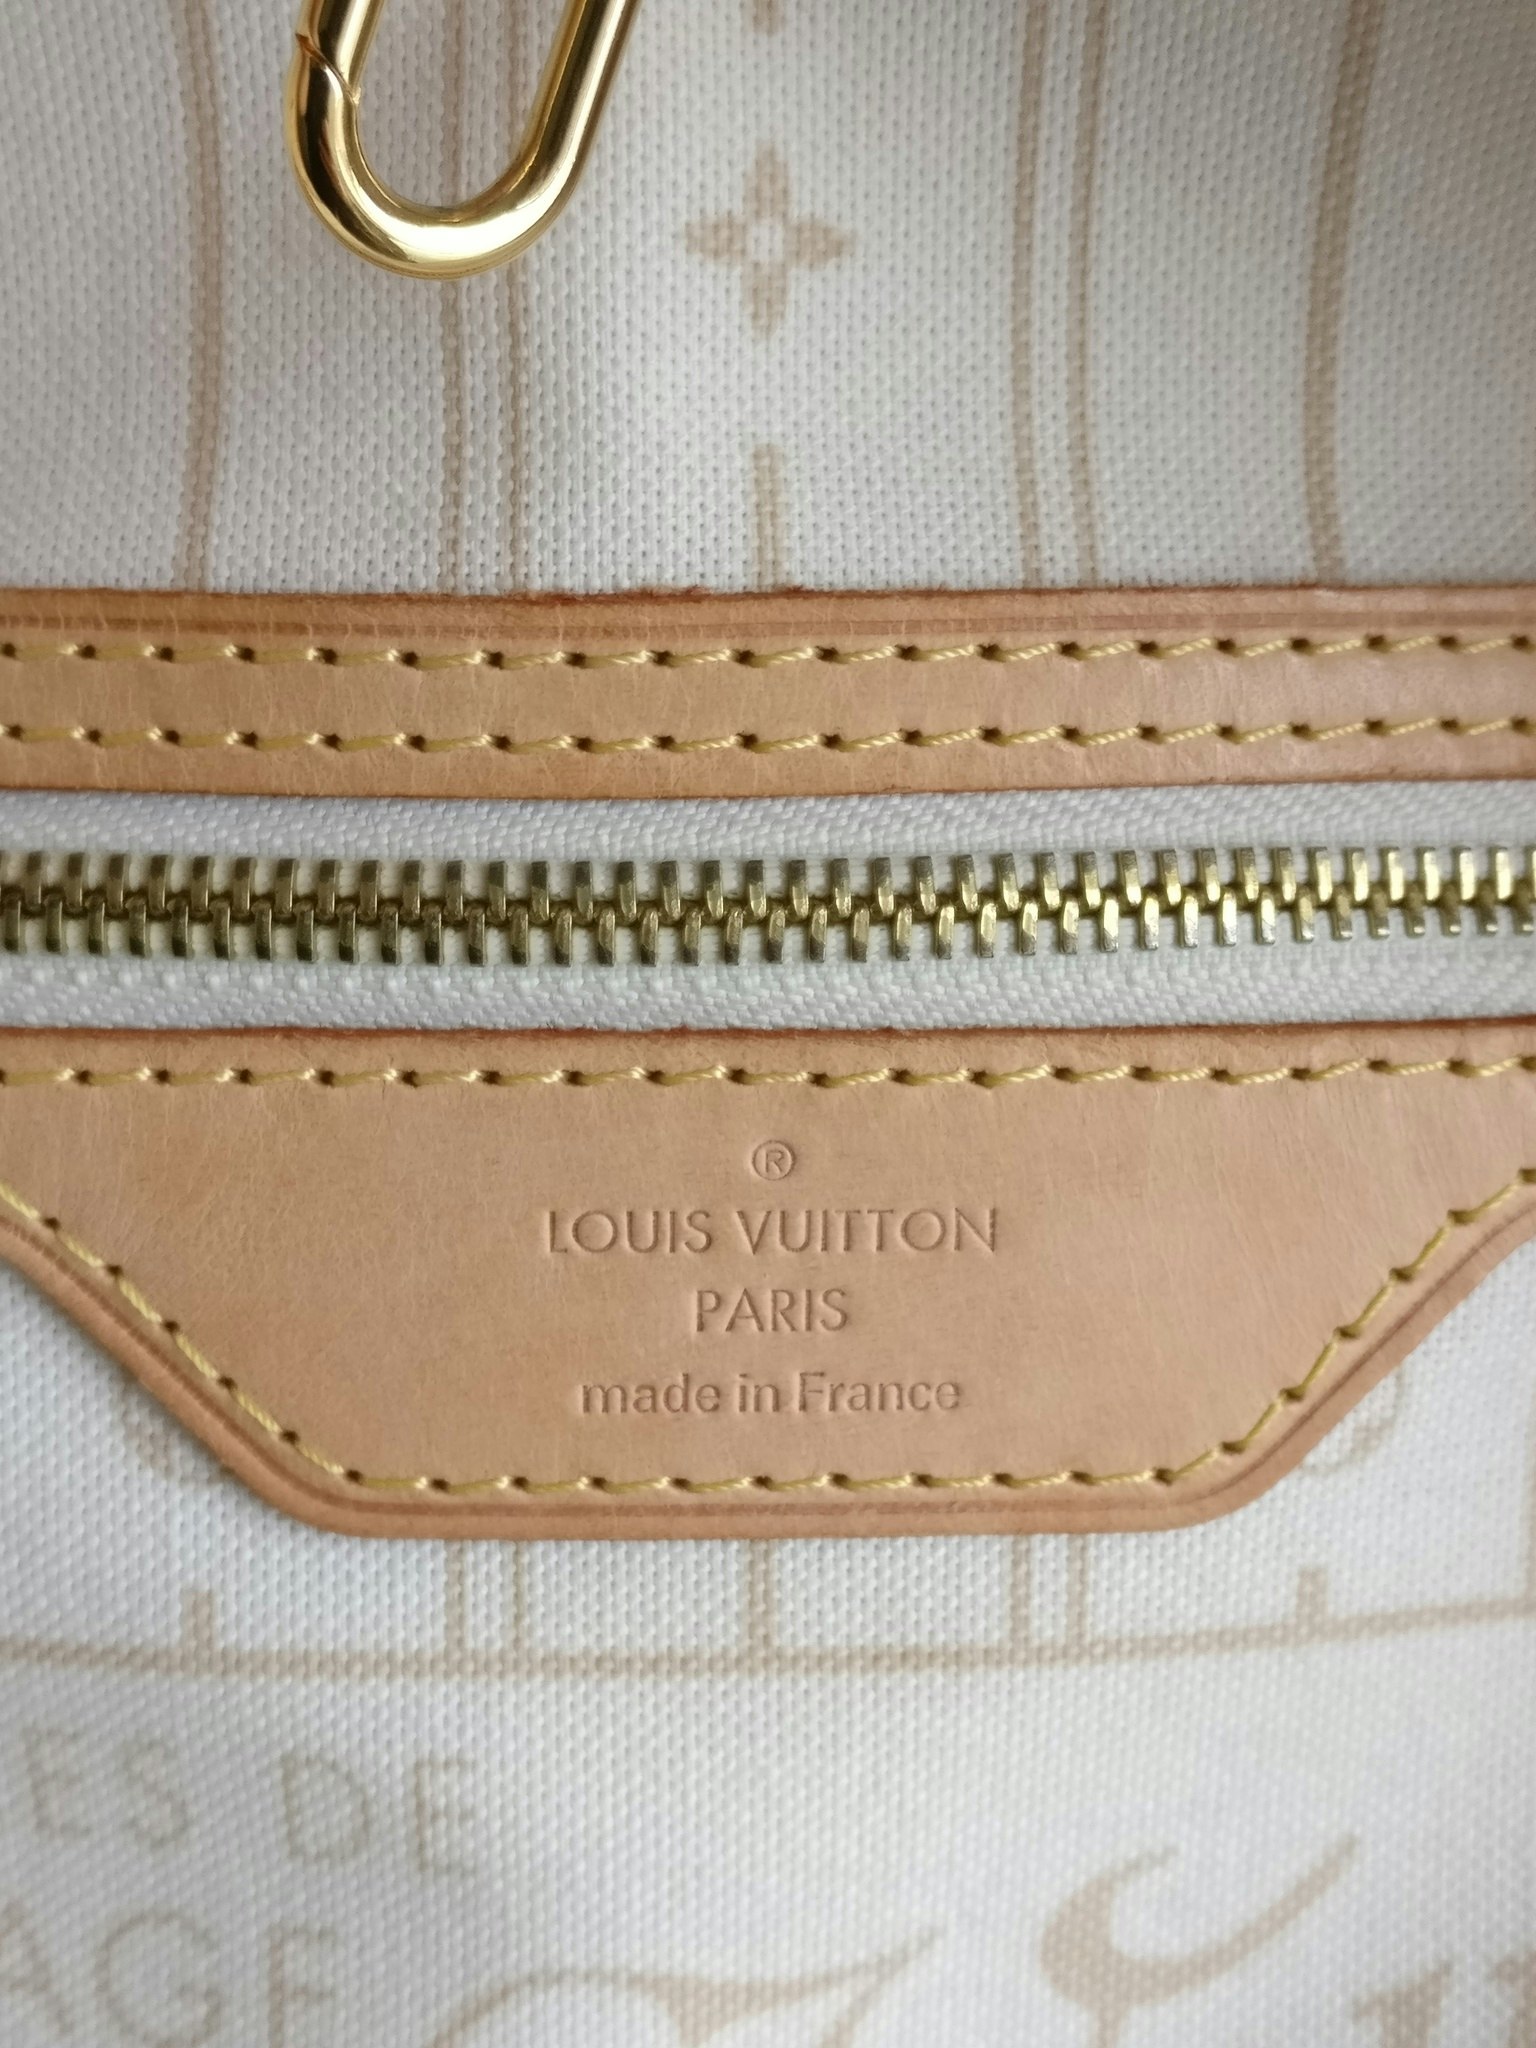 Louis Vuitton Neverfull PM Damier Azur